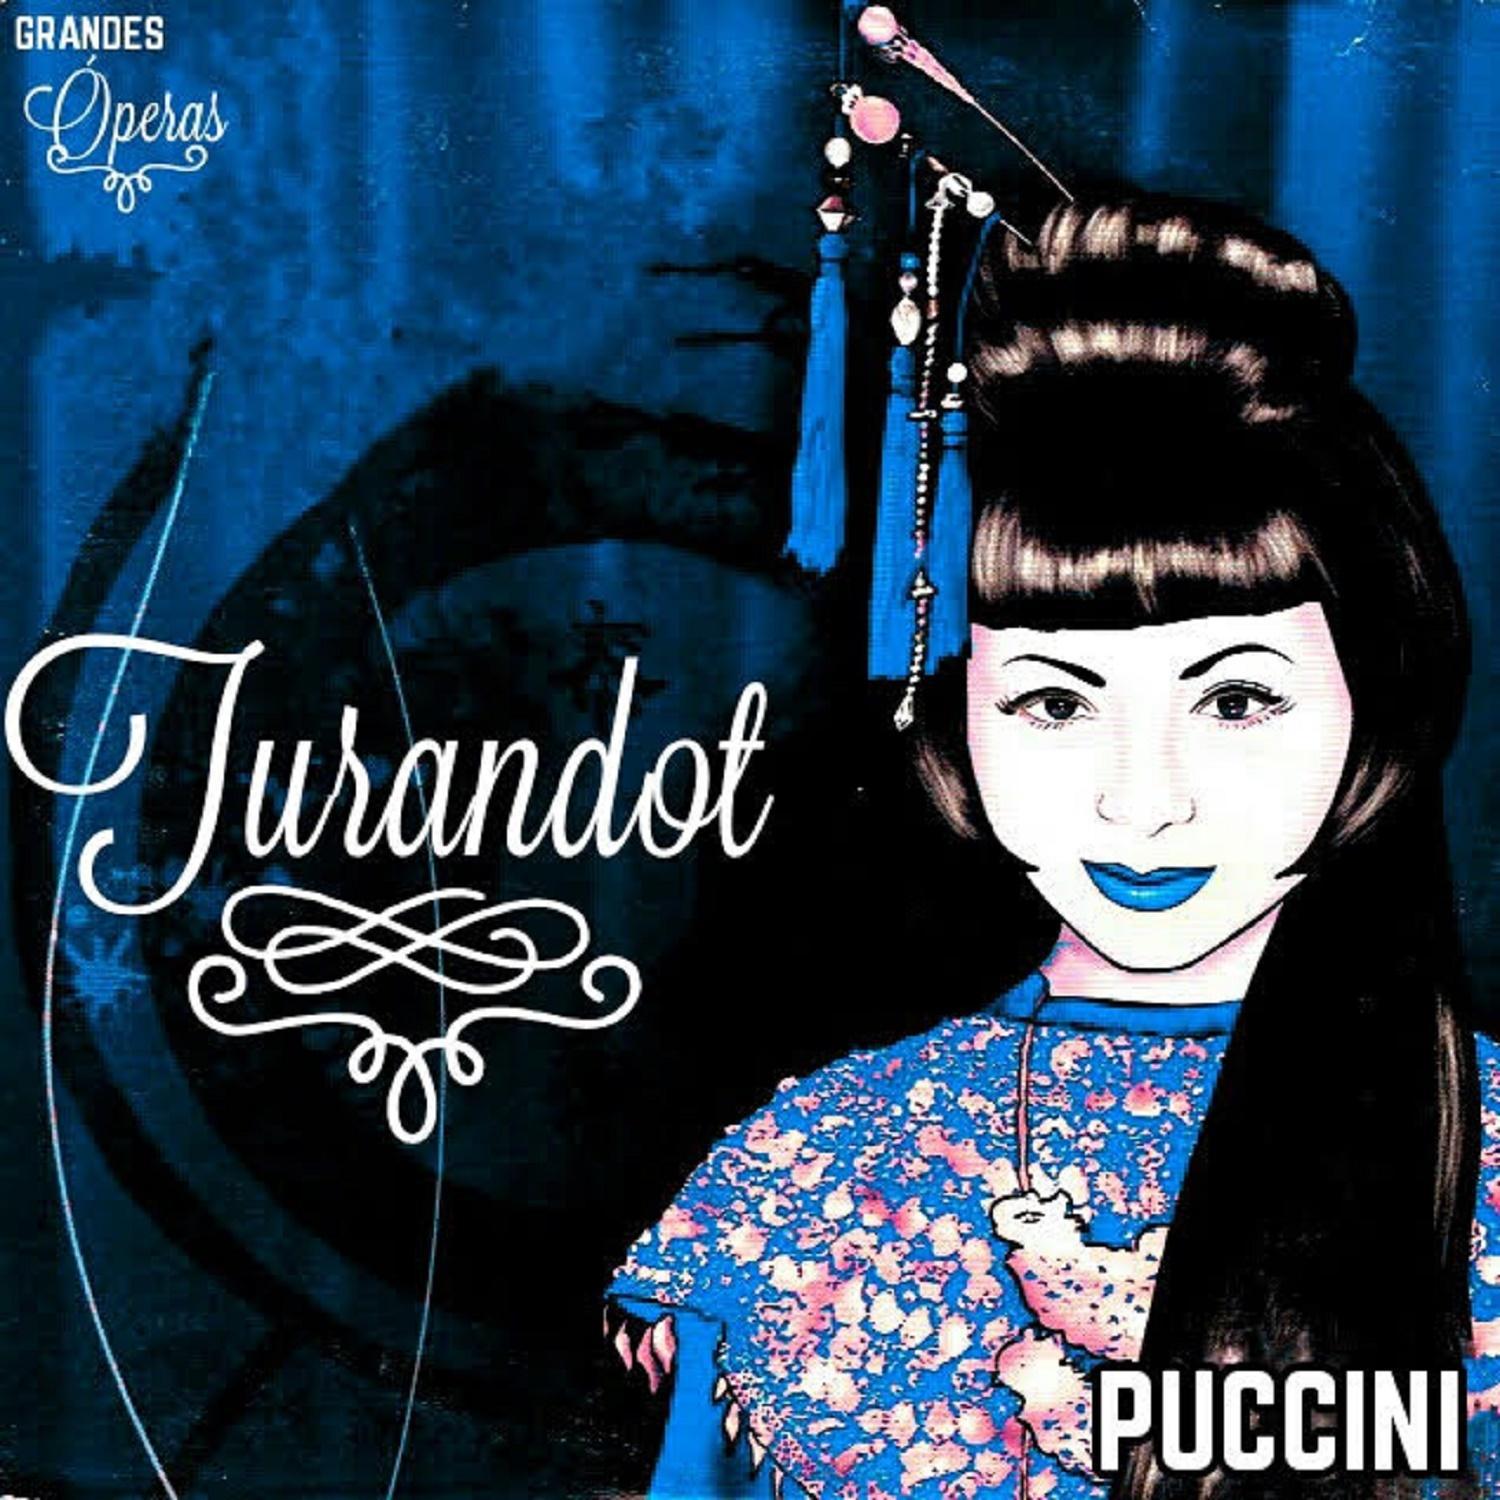 Turandot, Puccini, Grandes Ó peras